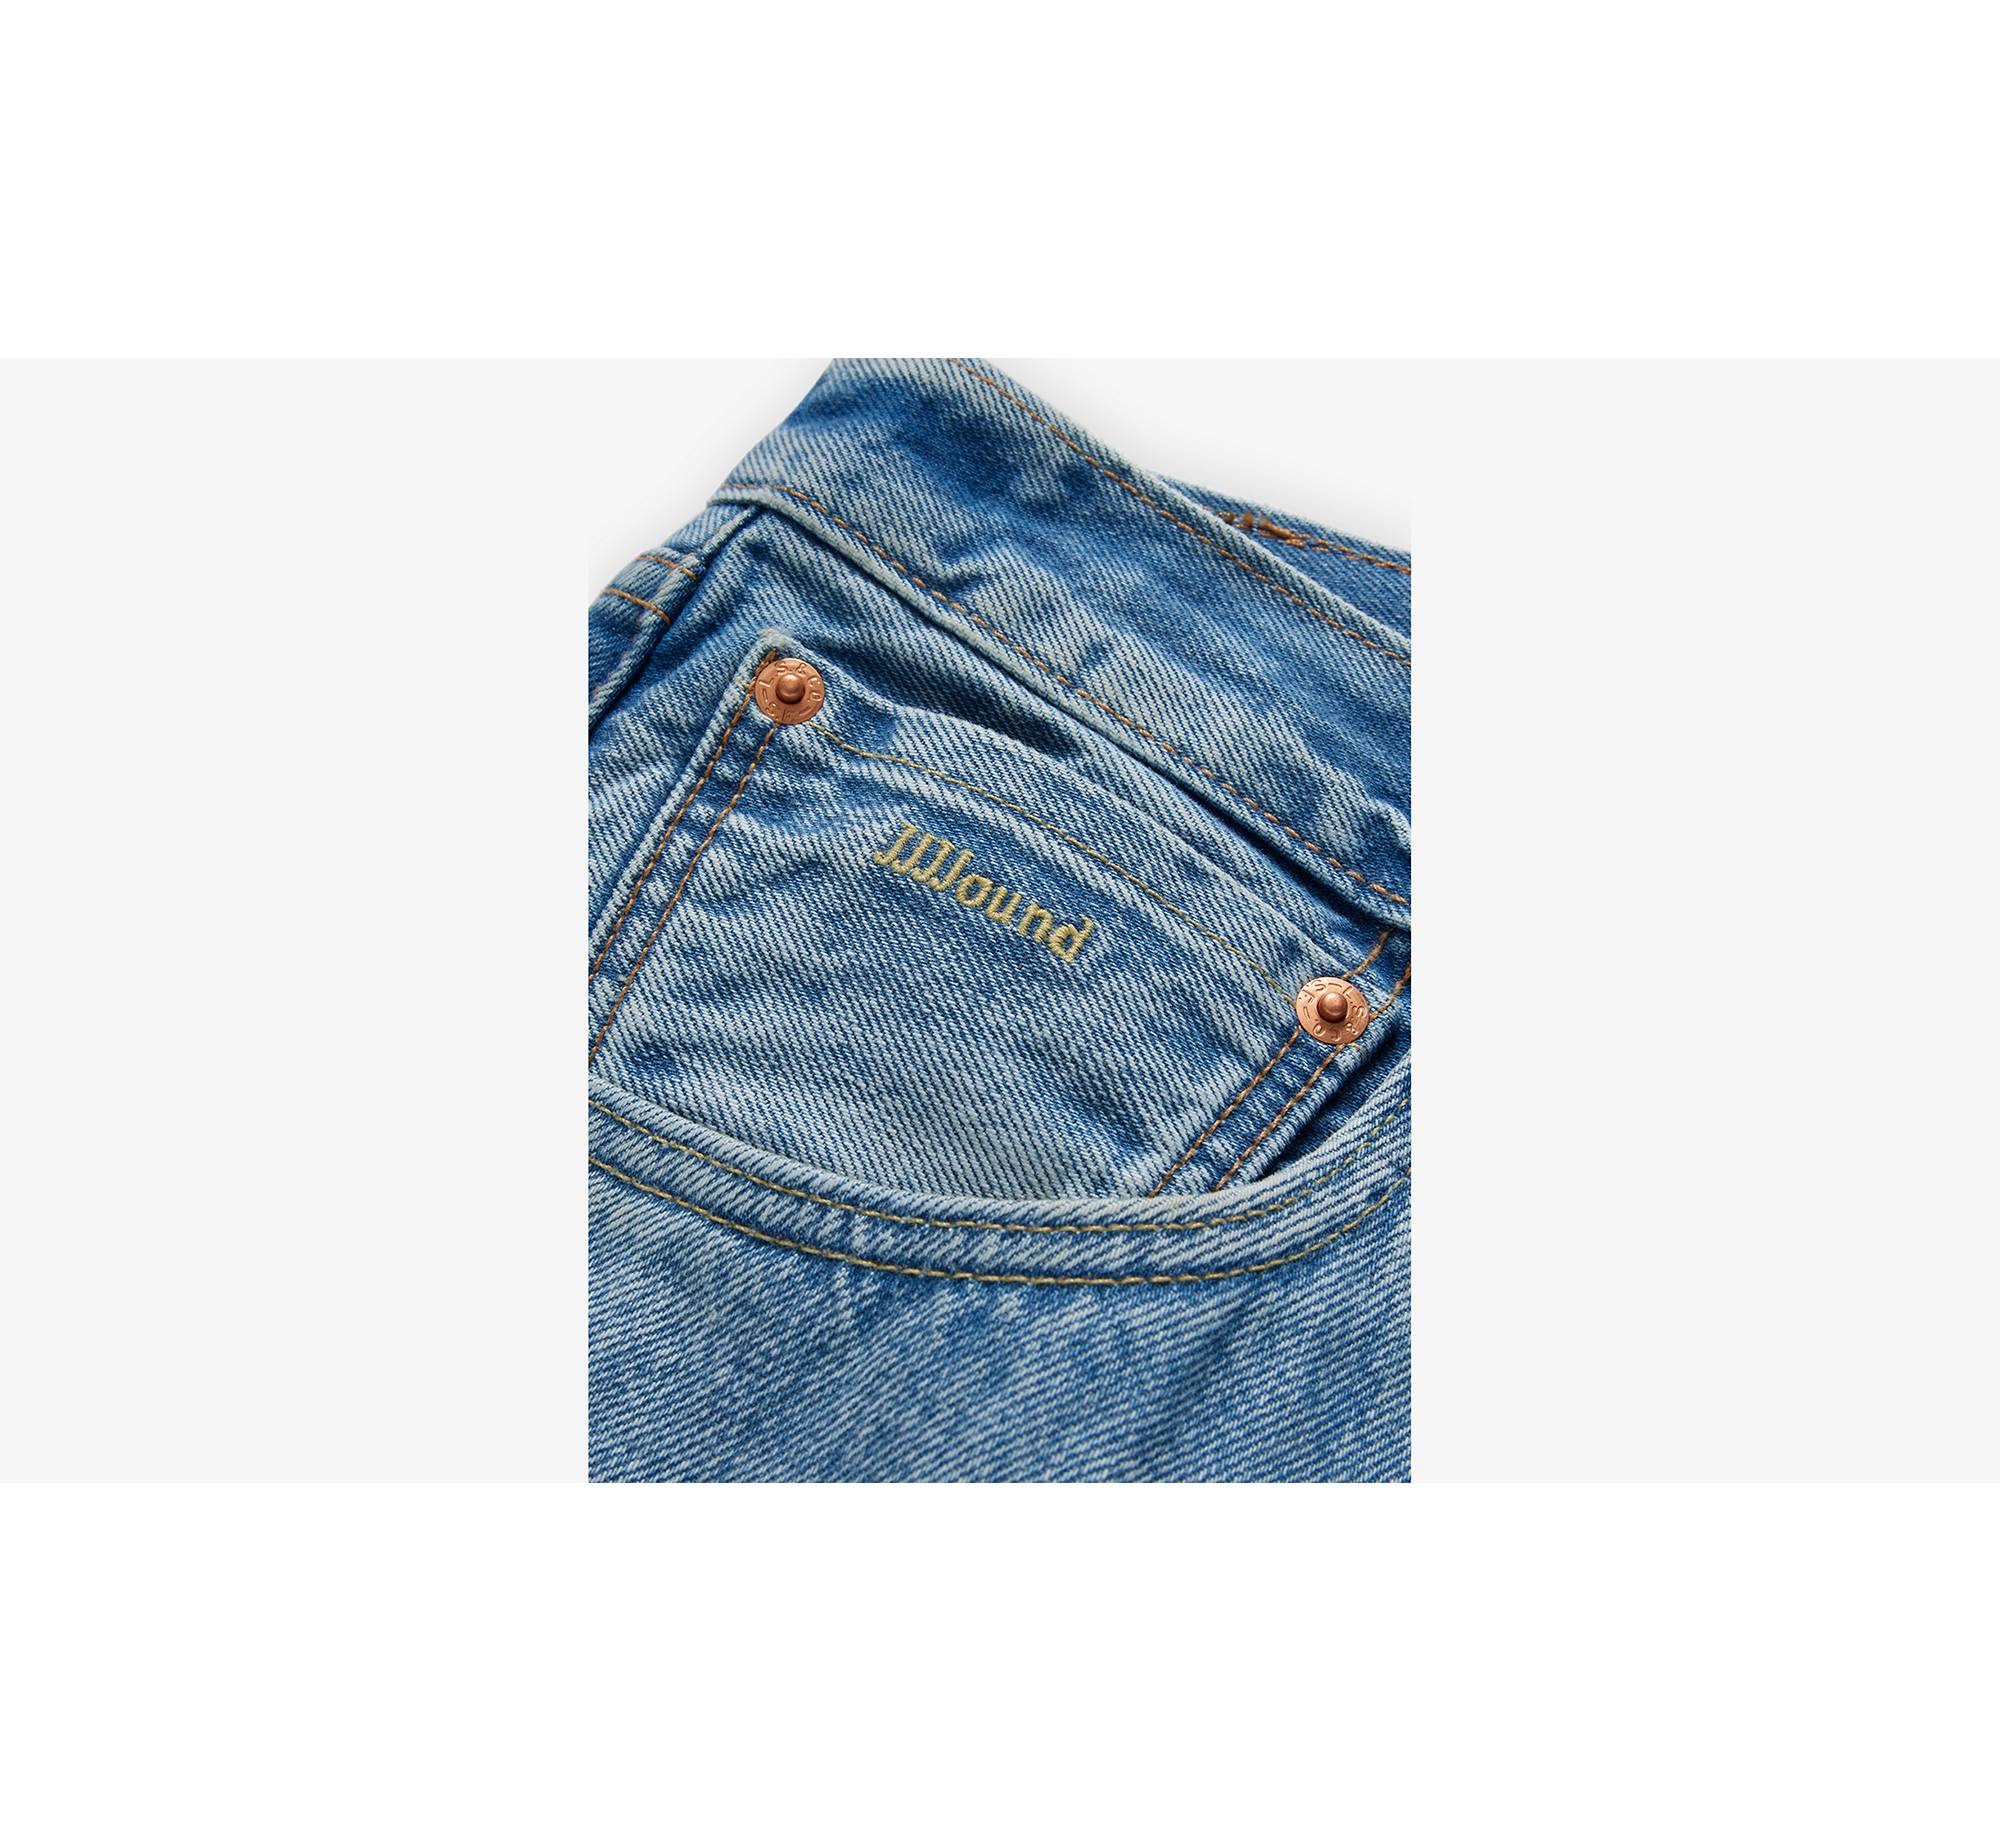 Levi's® X Jjjjound 501® '93 Original Fit Jeans - Medium Wash 